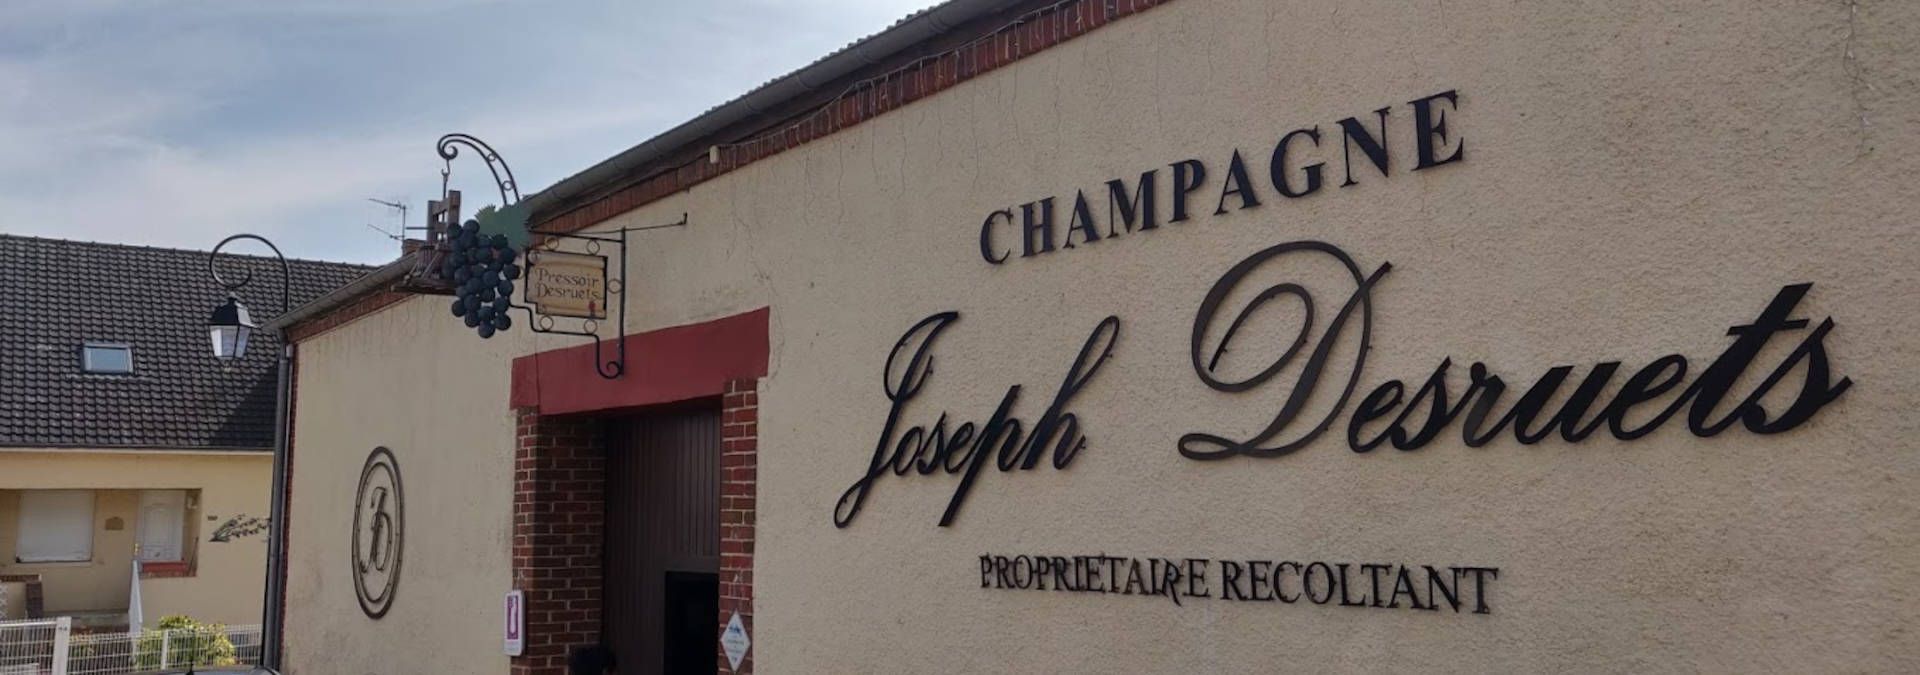 Champagne Joseph Desruets - Rue des Vignerons